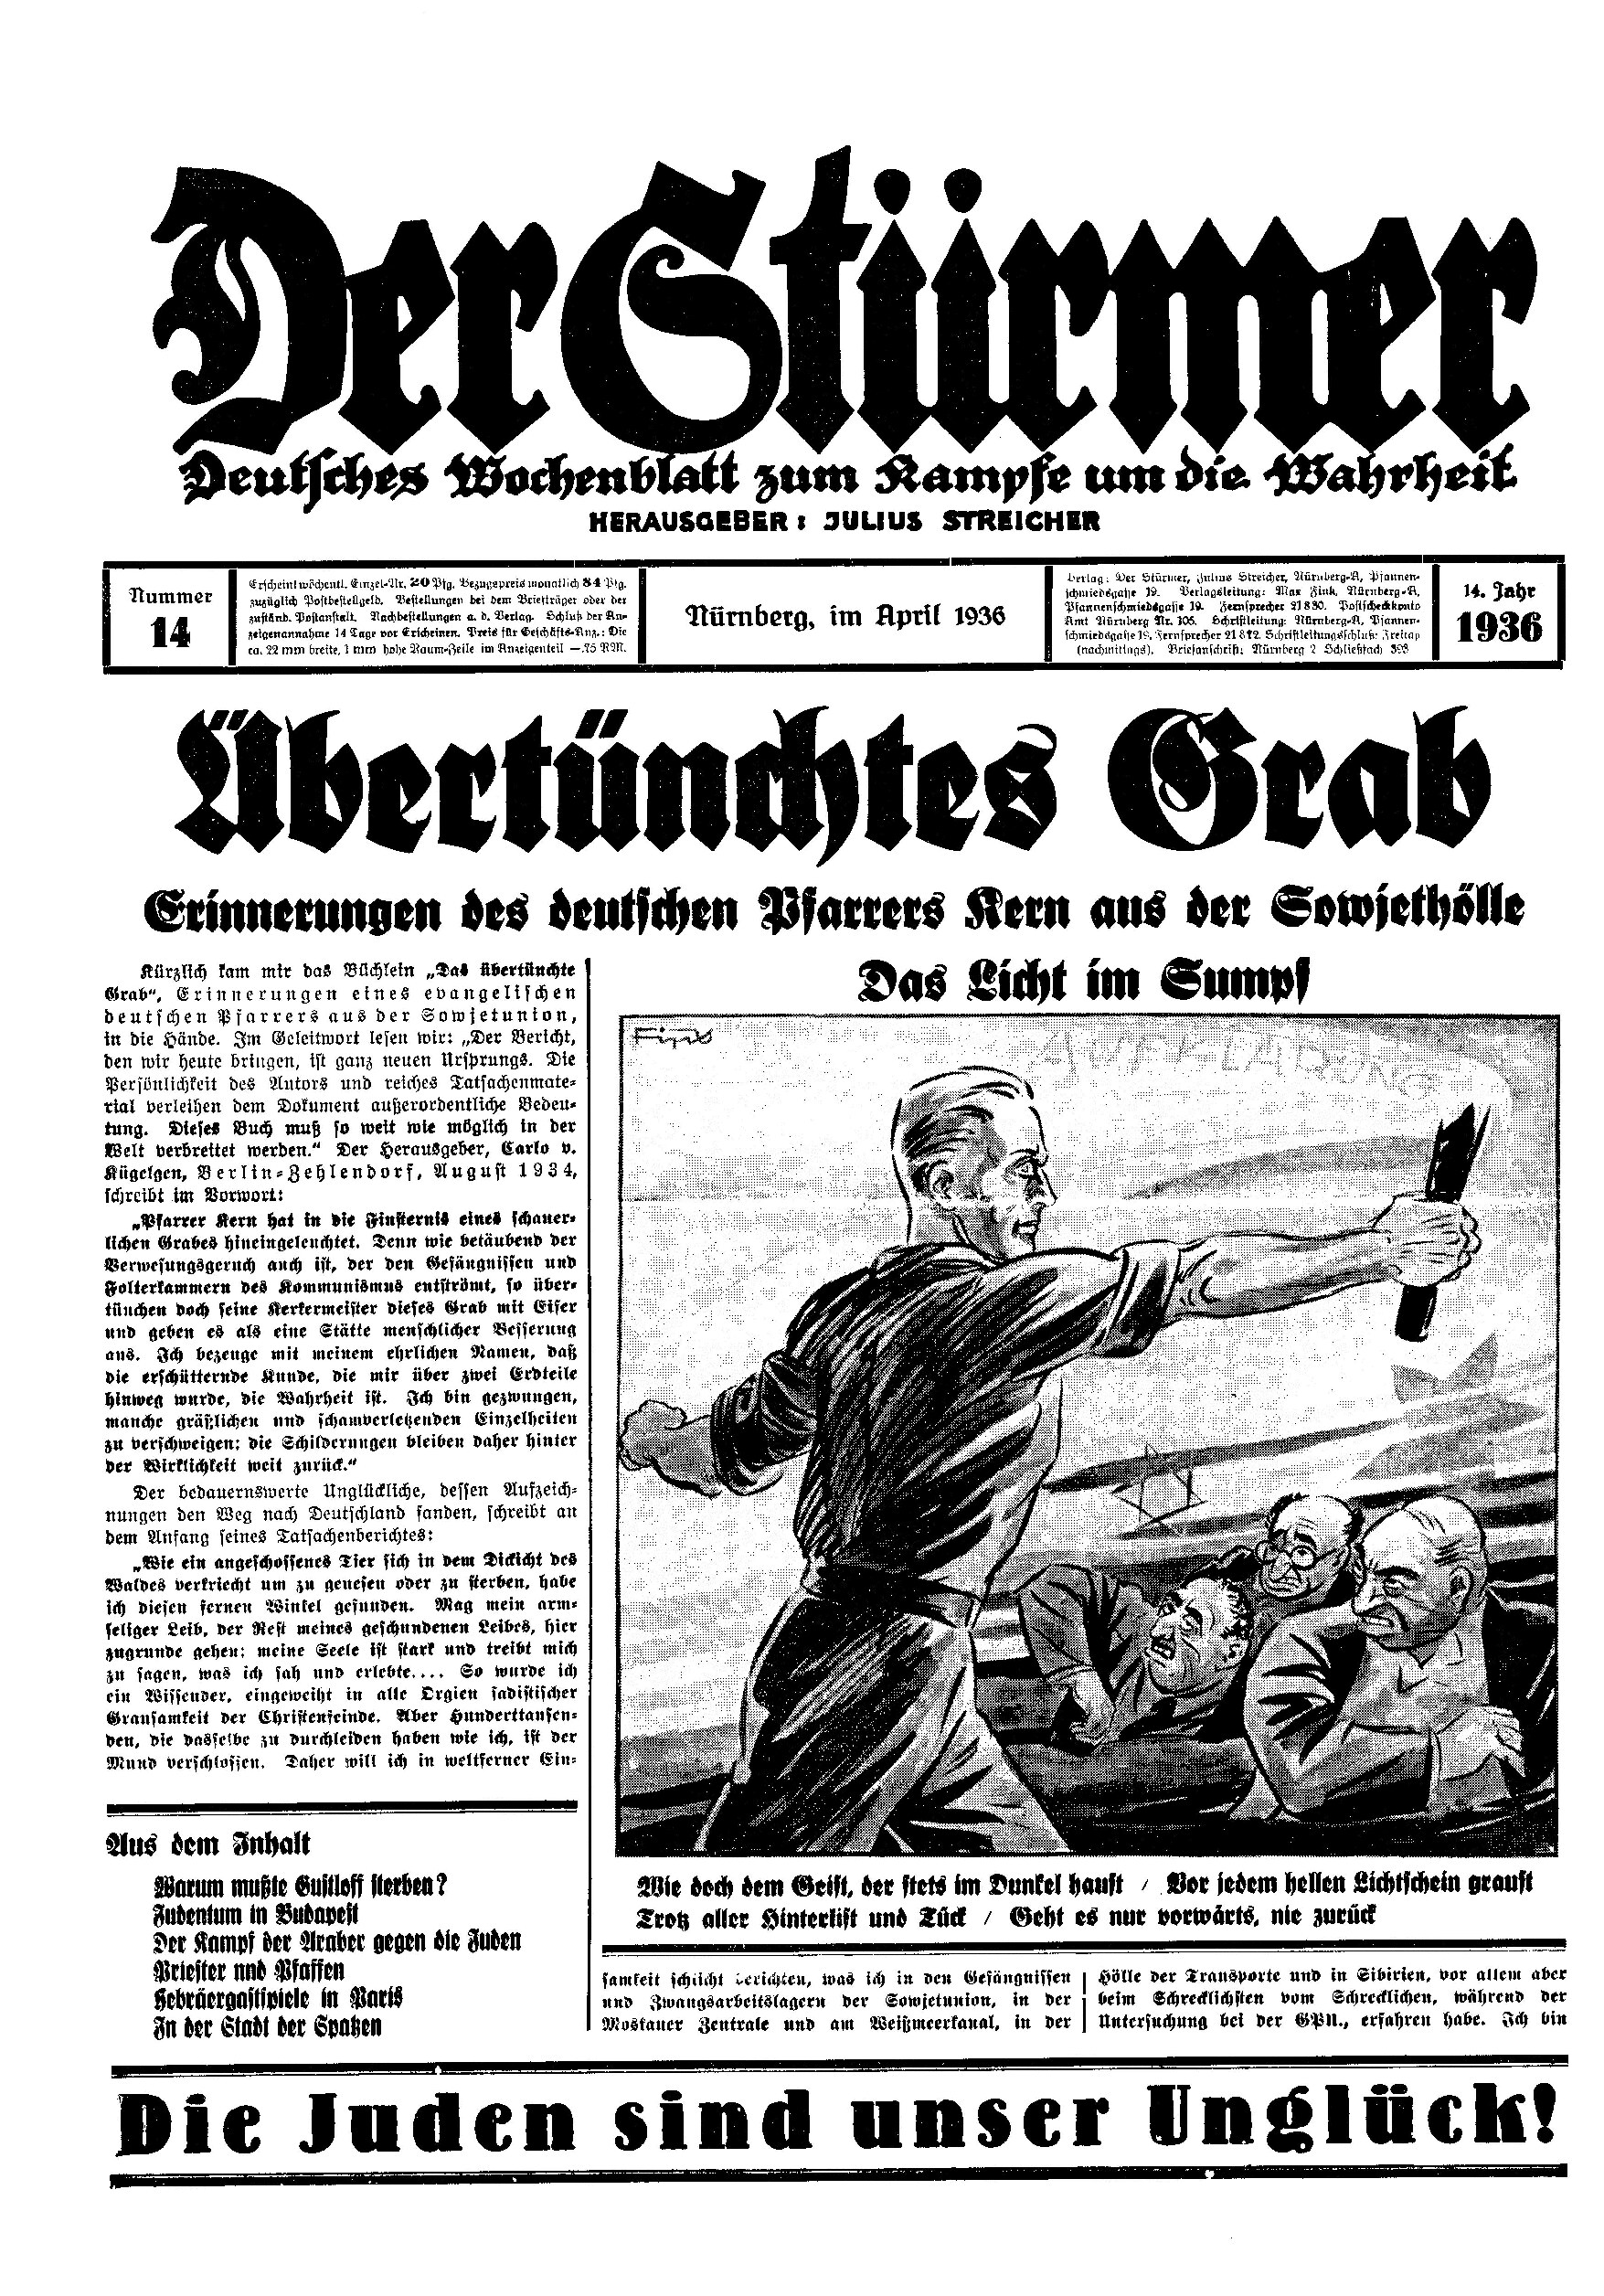 Der Stürmer - 1936 Nr. 14 - Übertünchtes Grab